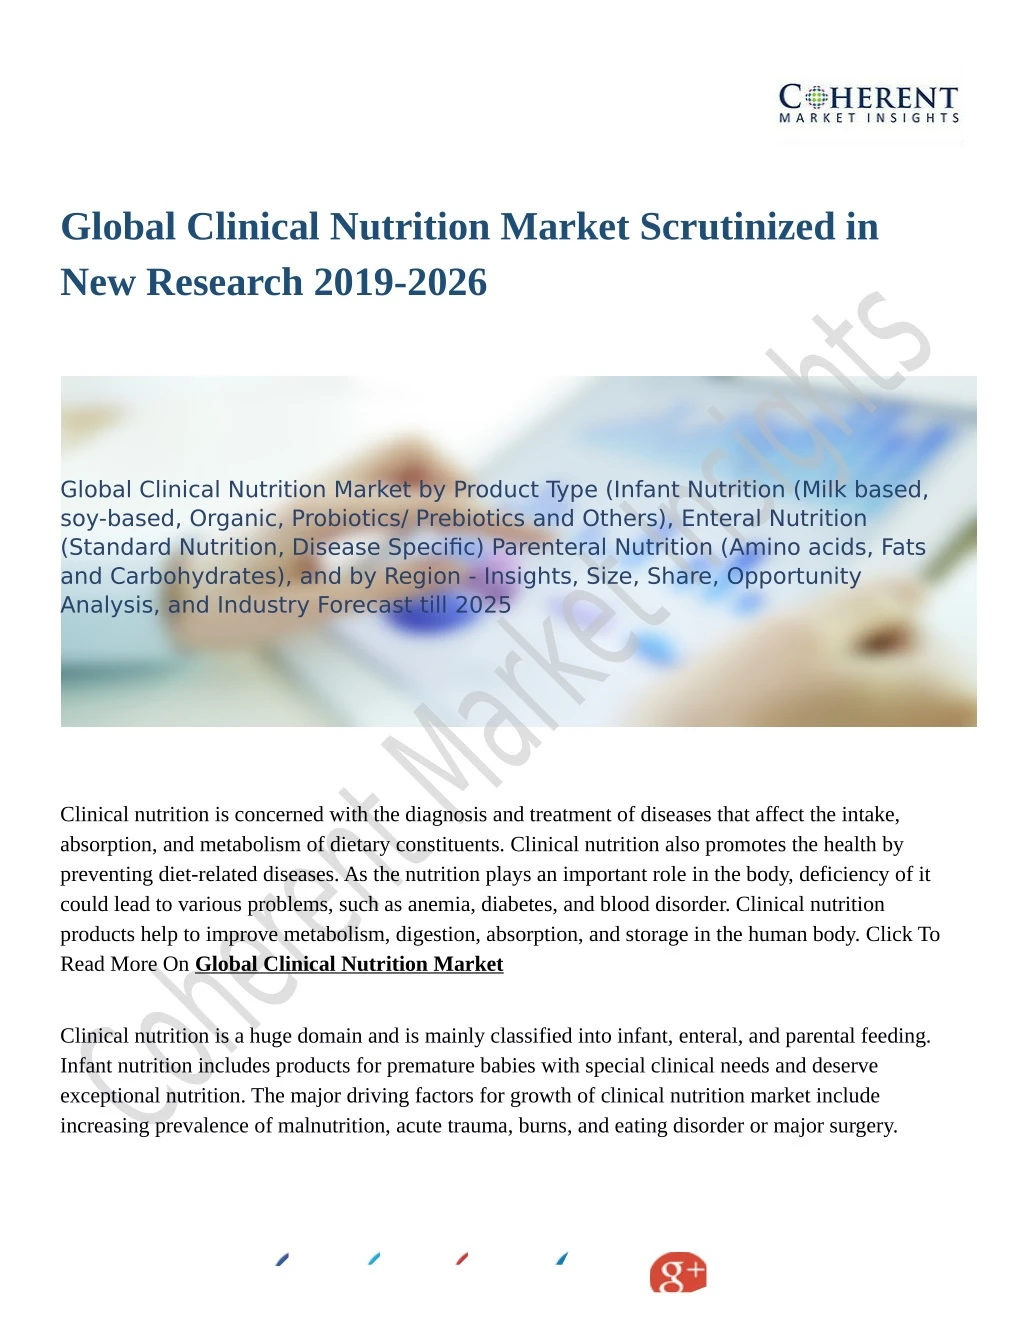 global clinical nutrition market scrutinized